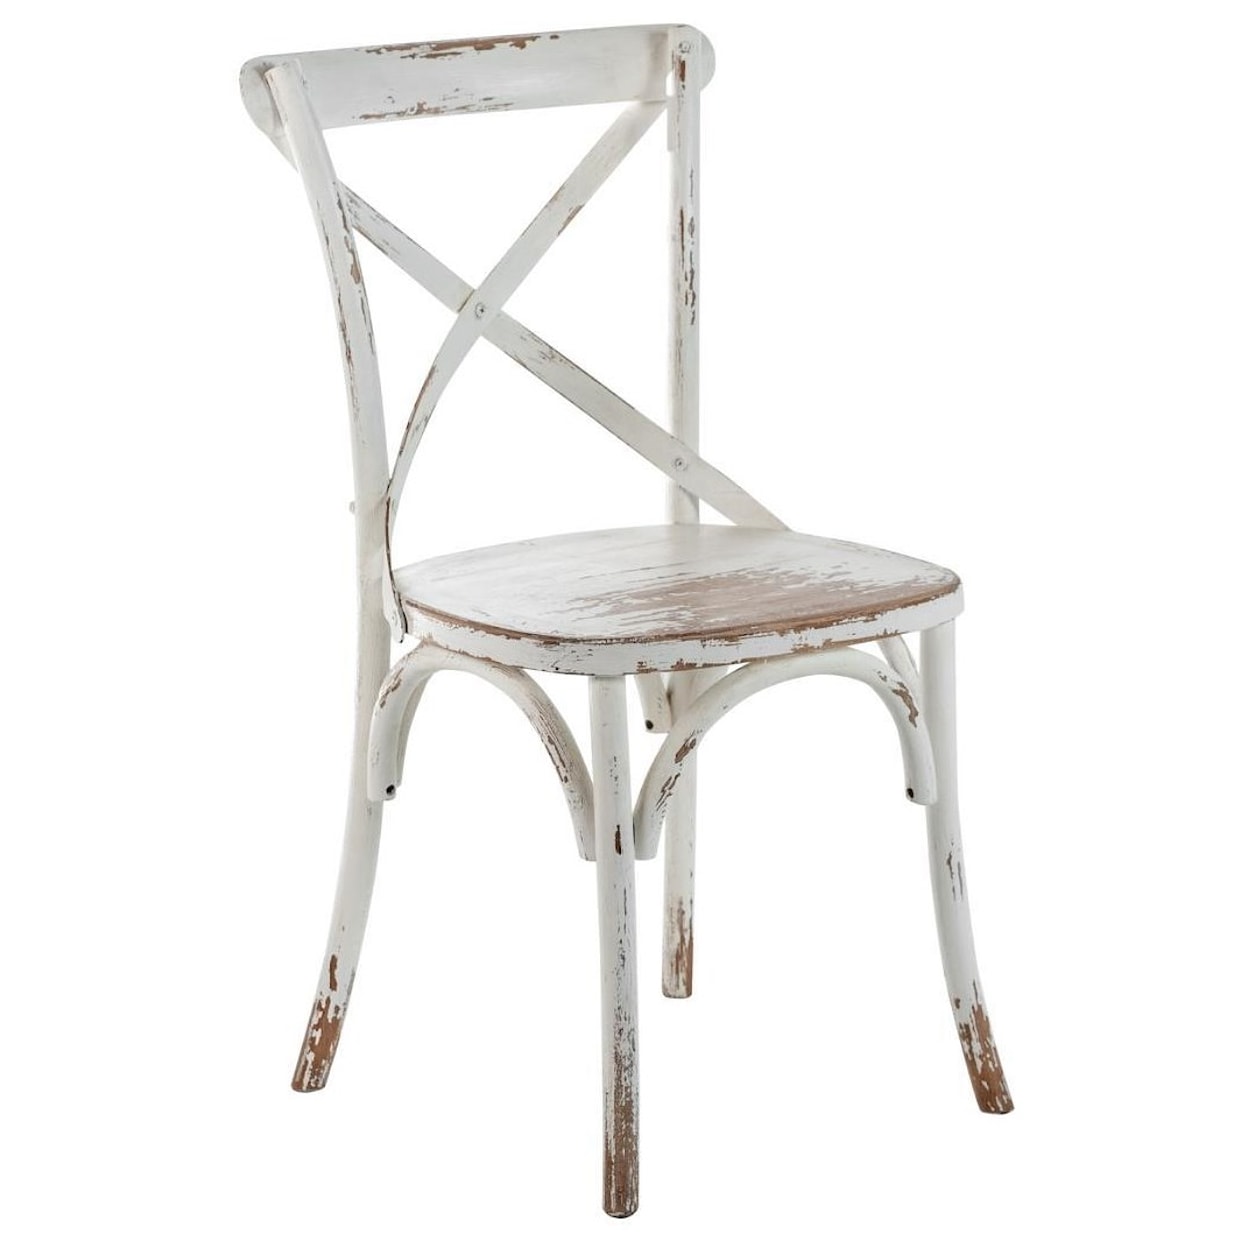 EAGLE INDUSTRIES Redmond Redmond Dining Chair Antique White